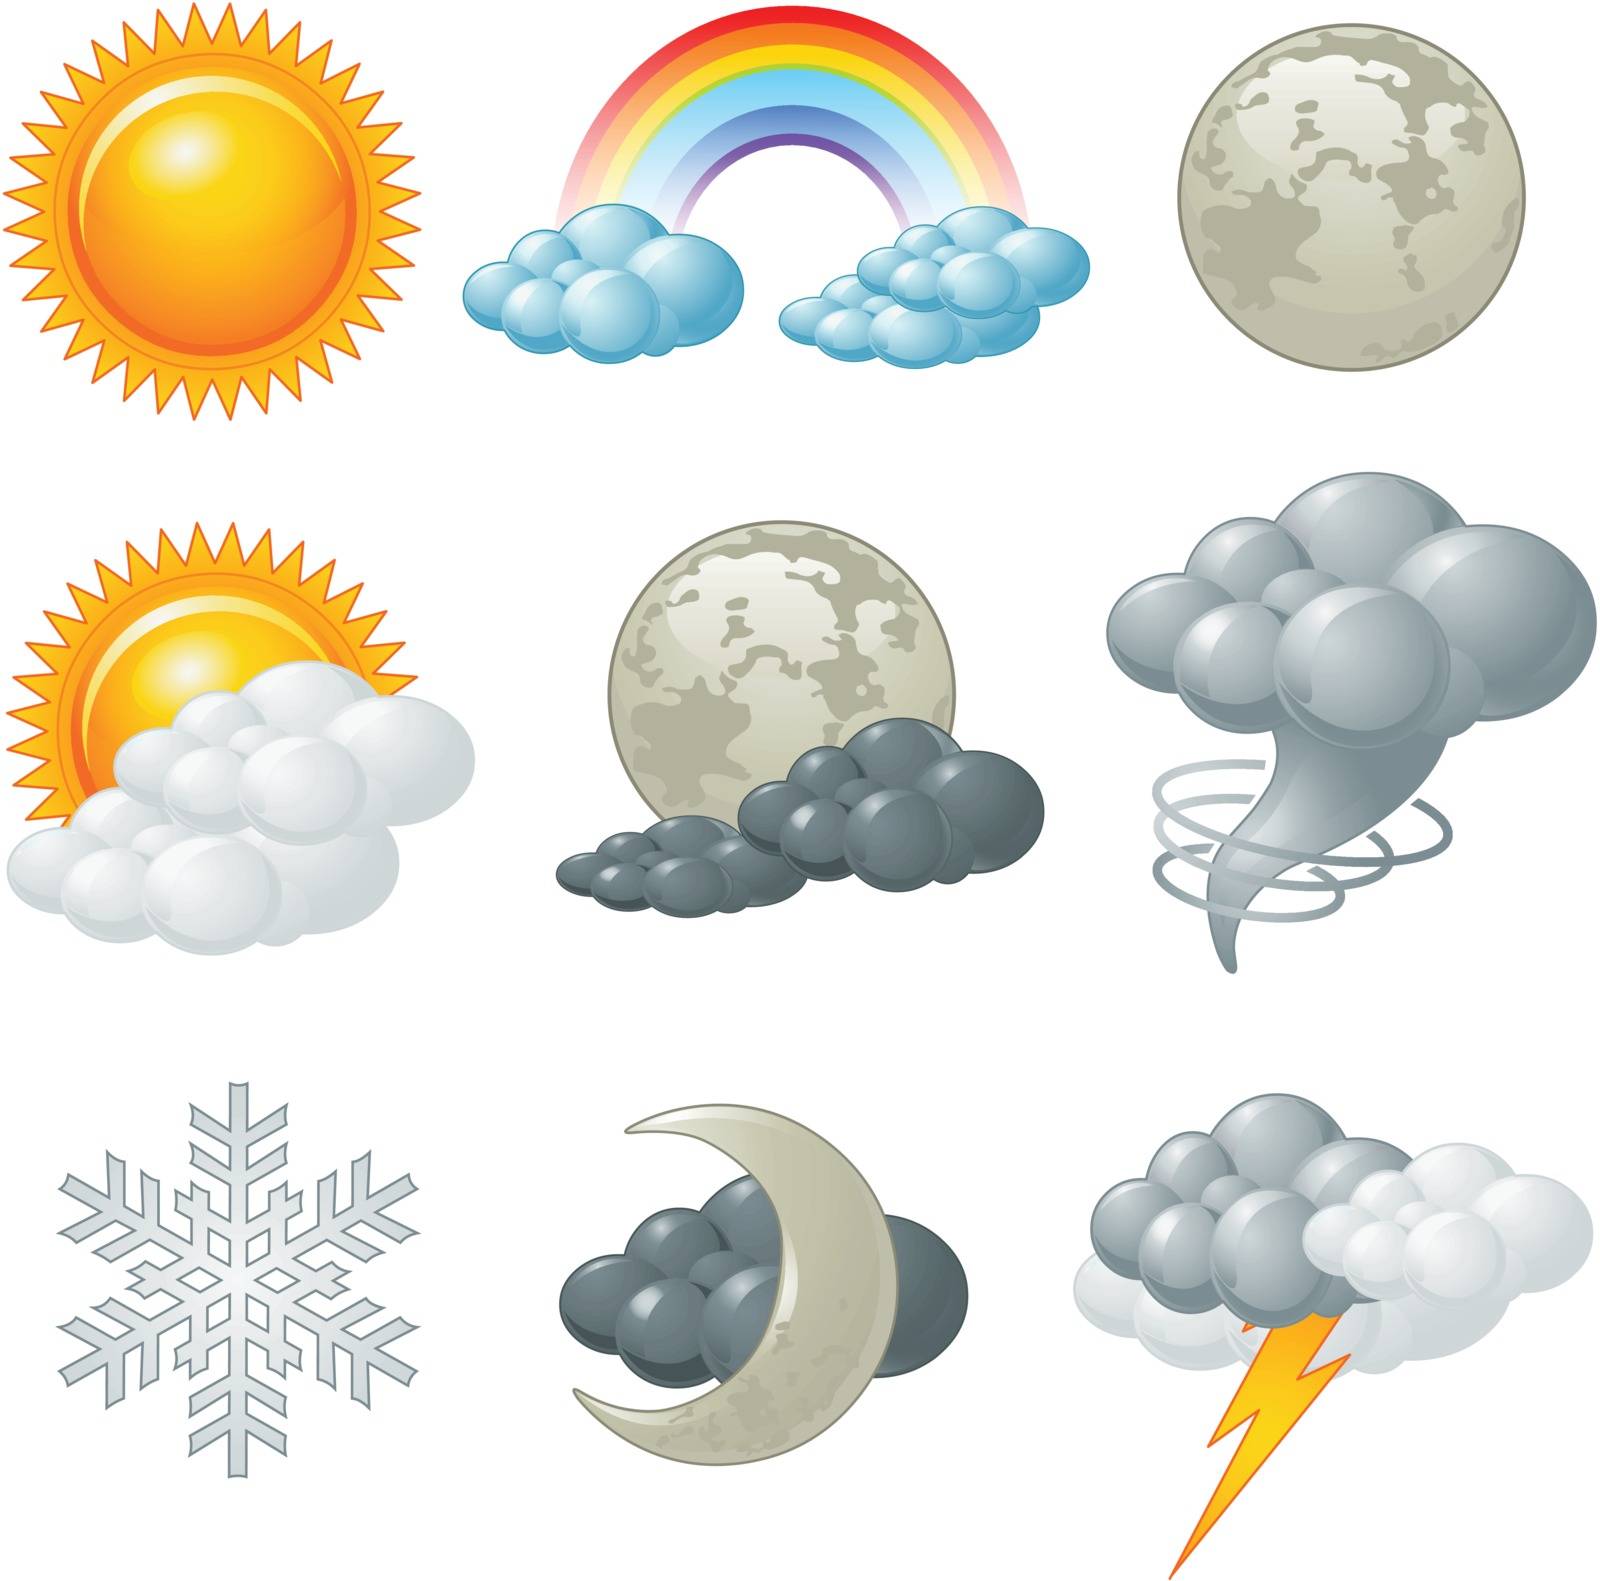 Weather icons by Dazdraperma